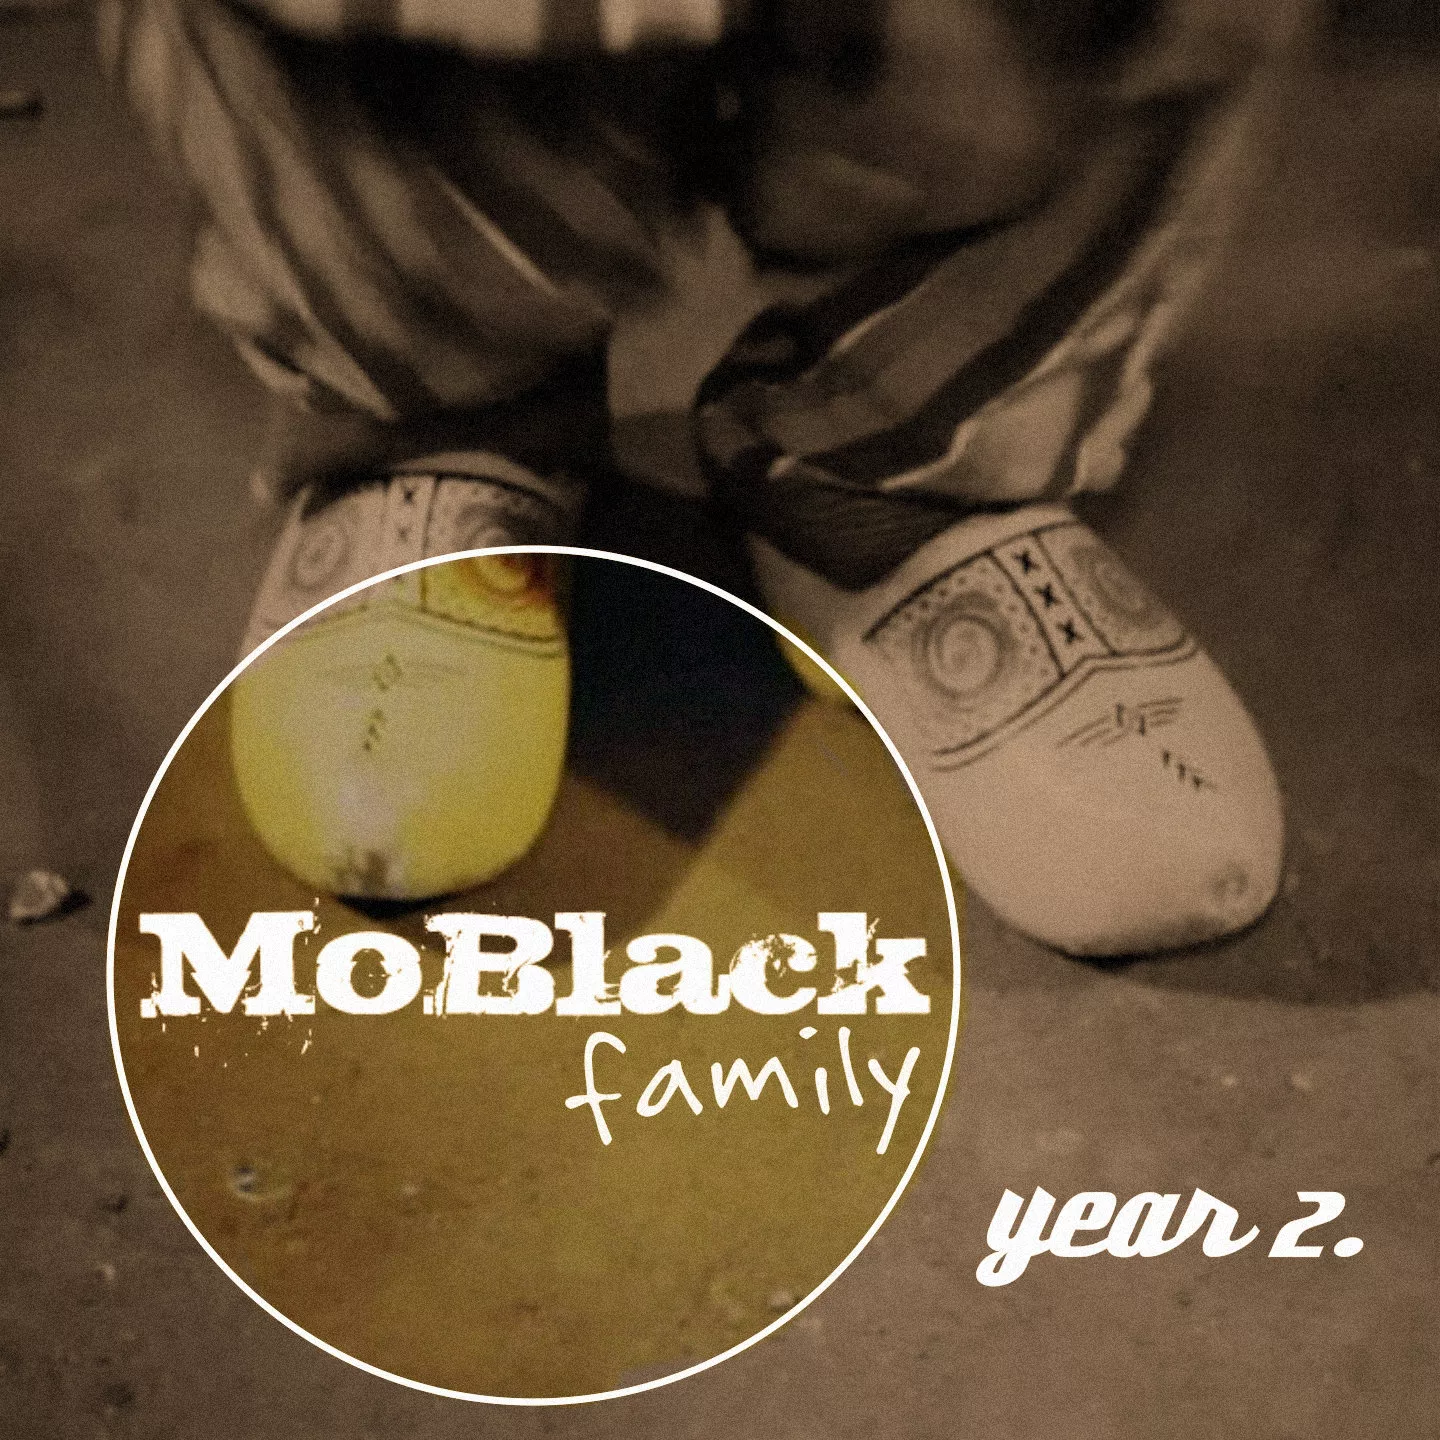 VA - MoBlack Family, Year 2. (MBR095)